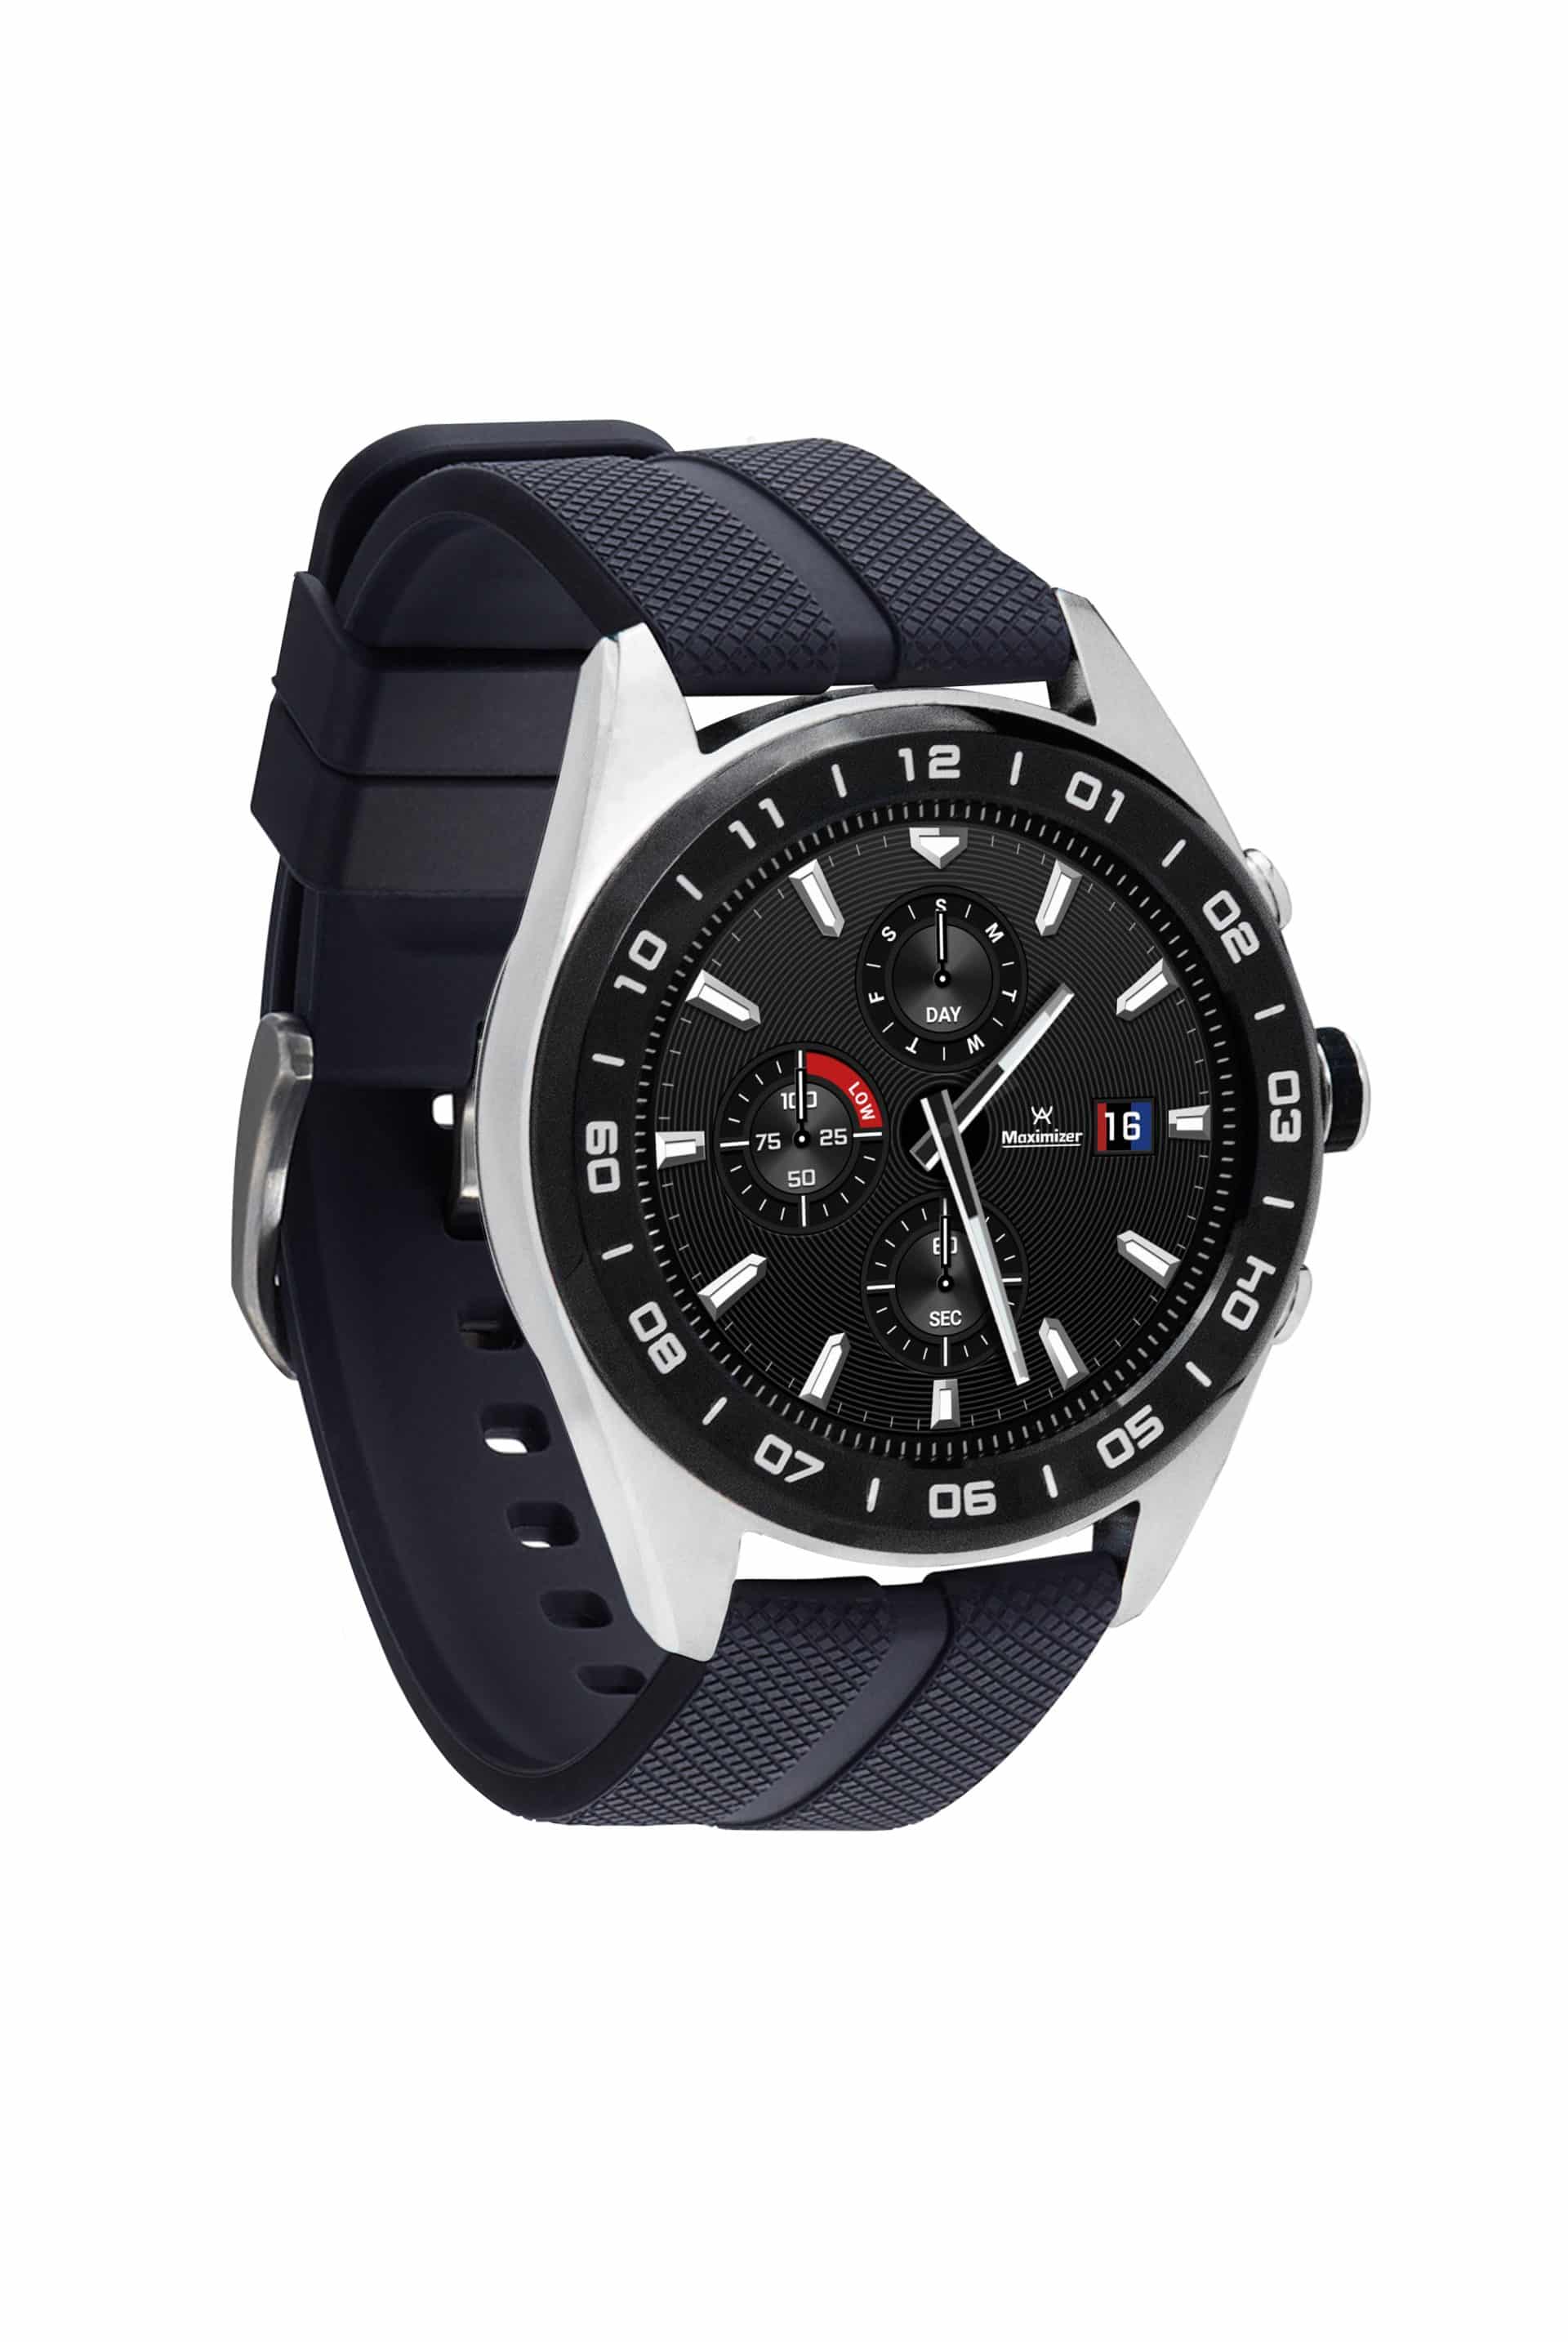 LG Watch W7 Smartwatch by Wear OS- right angle